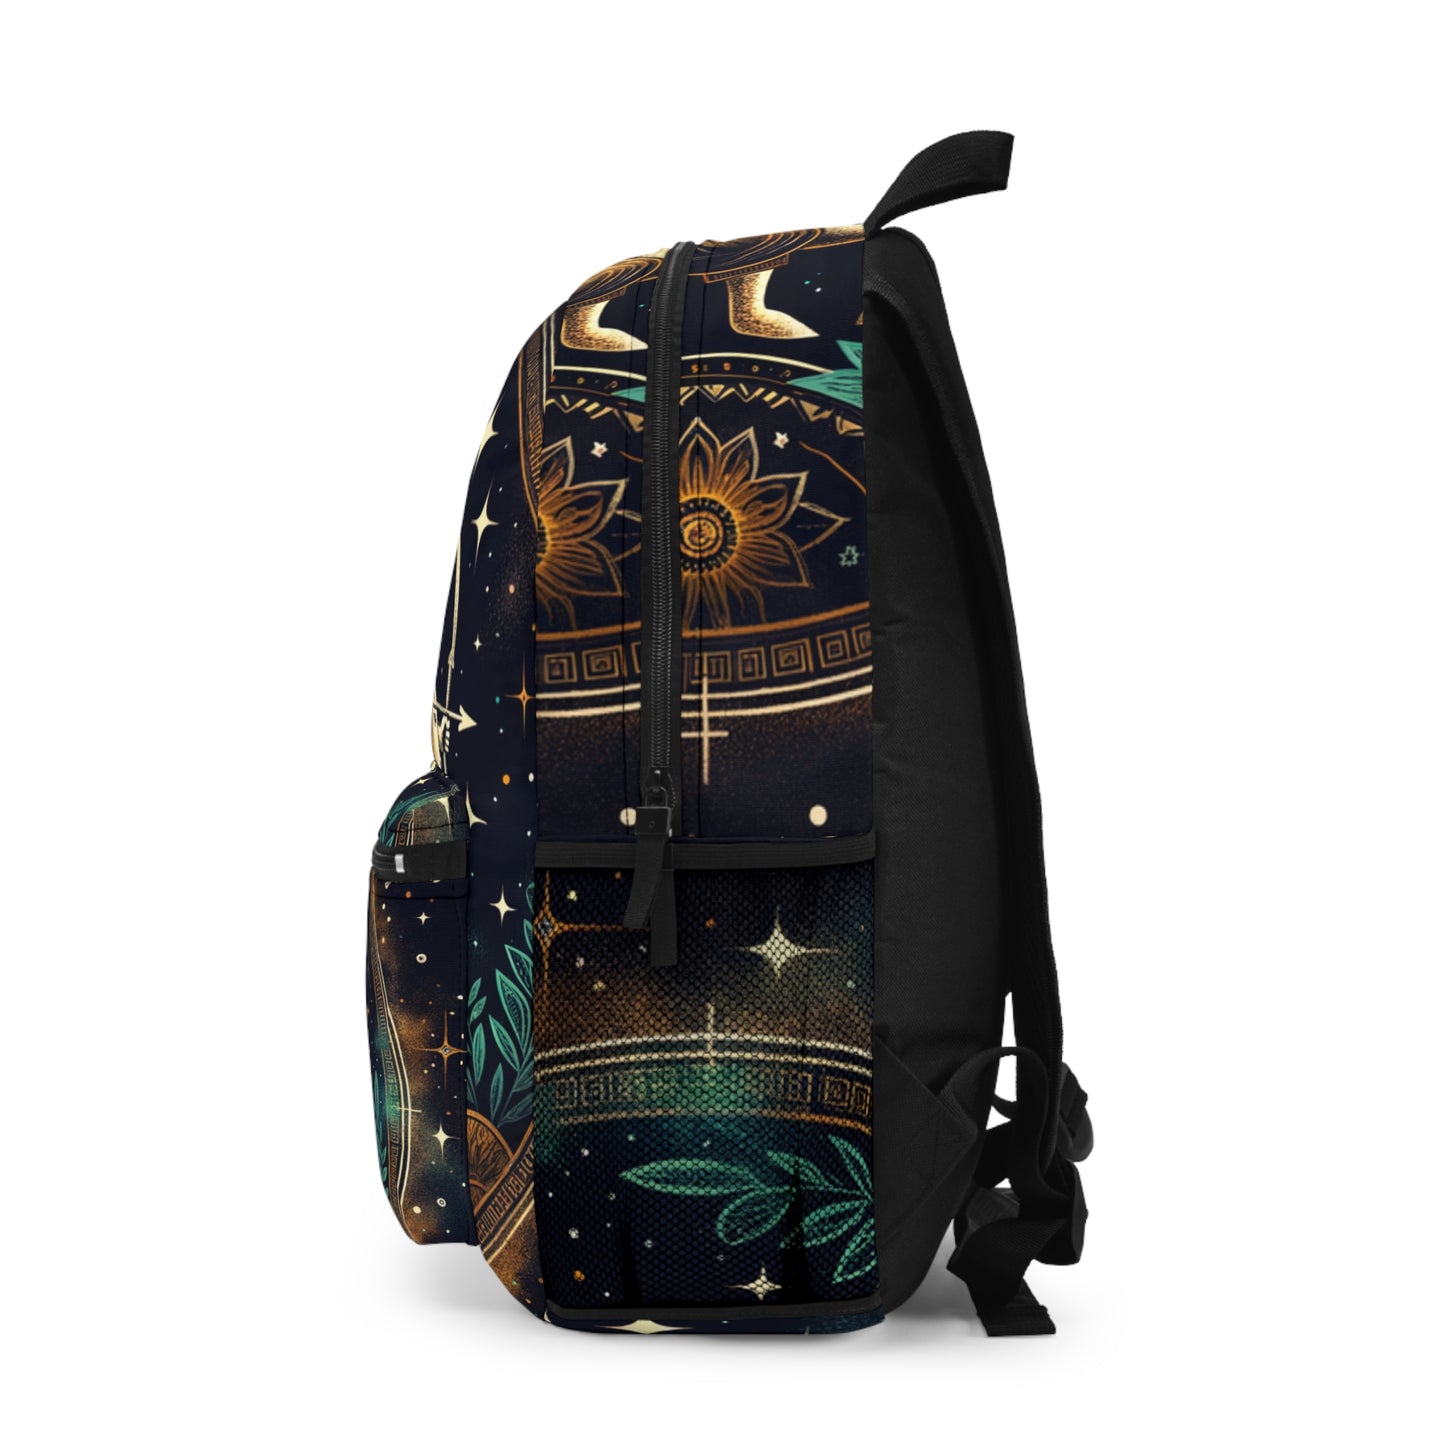 Sagittarius Emblem - Backpack